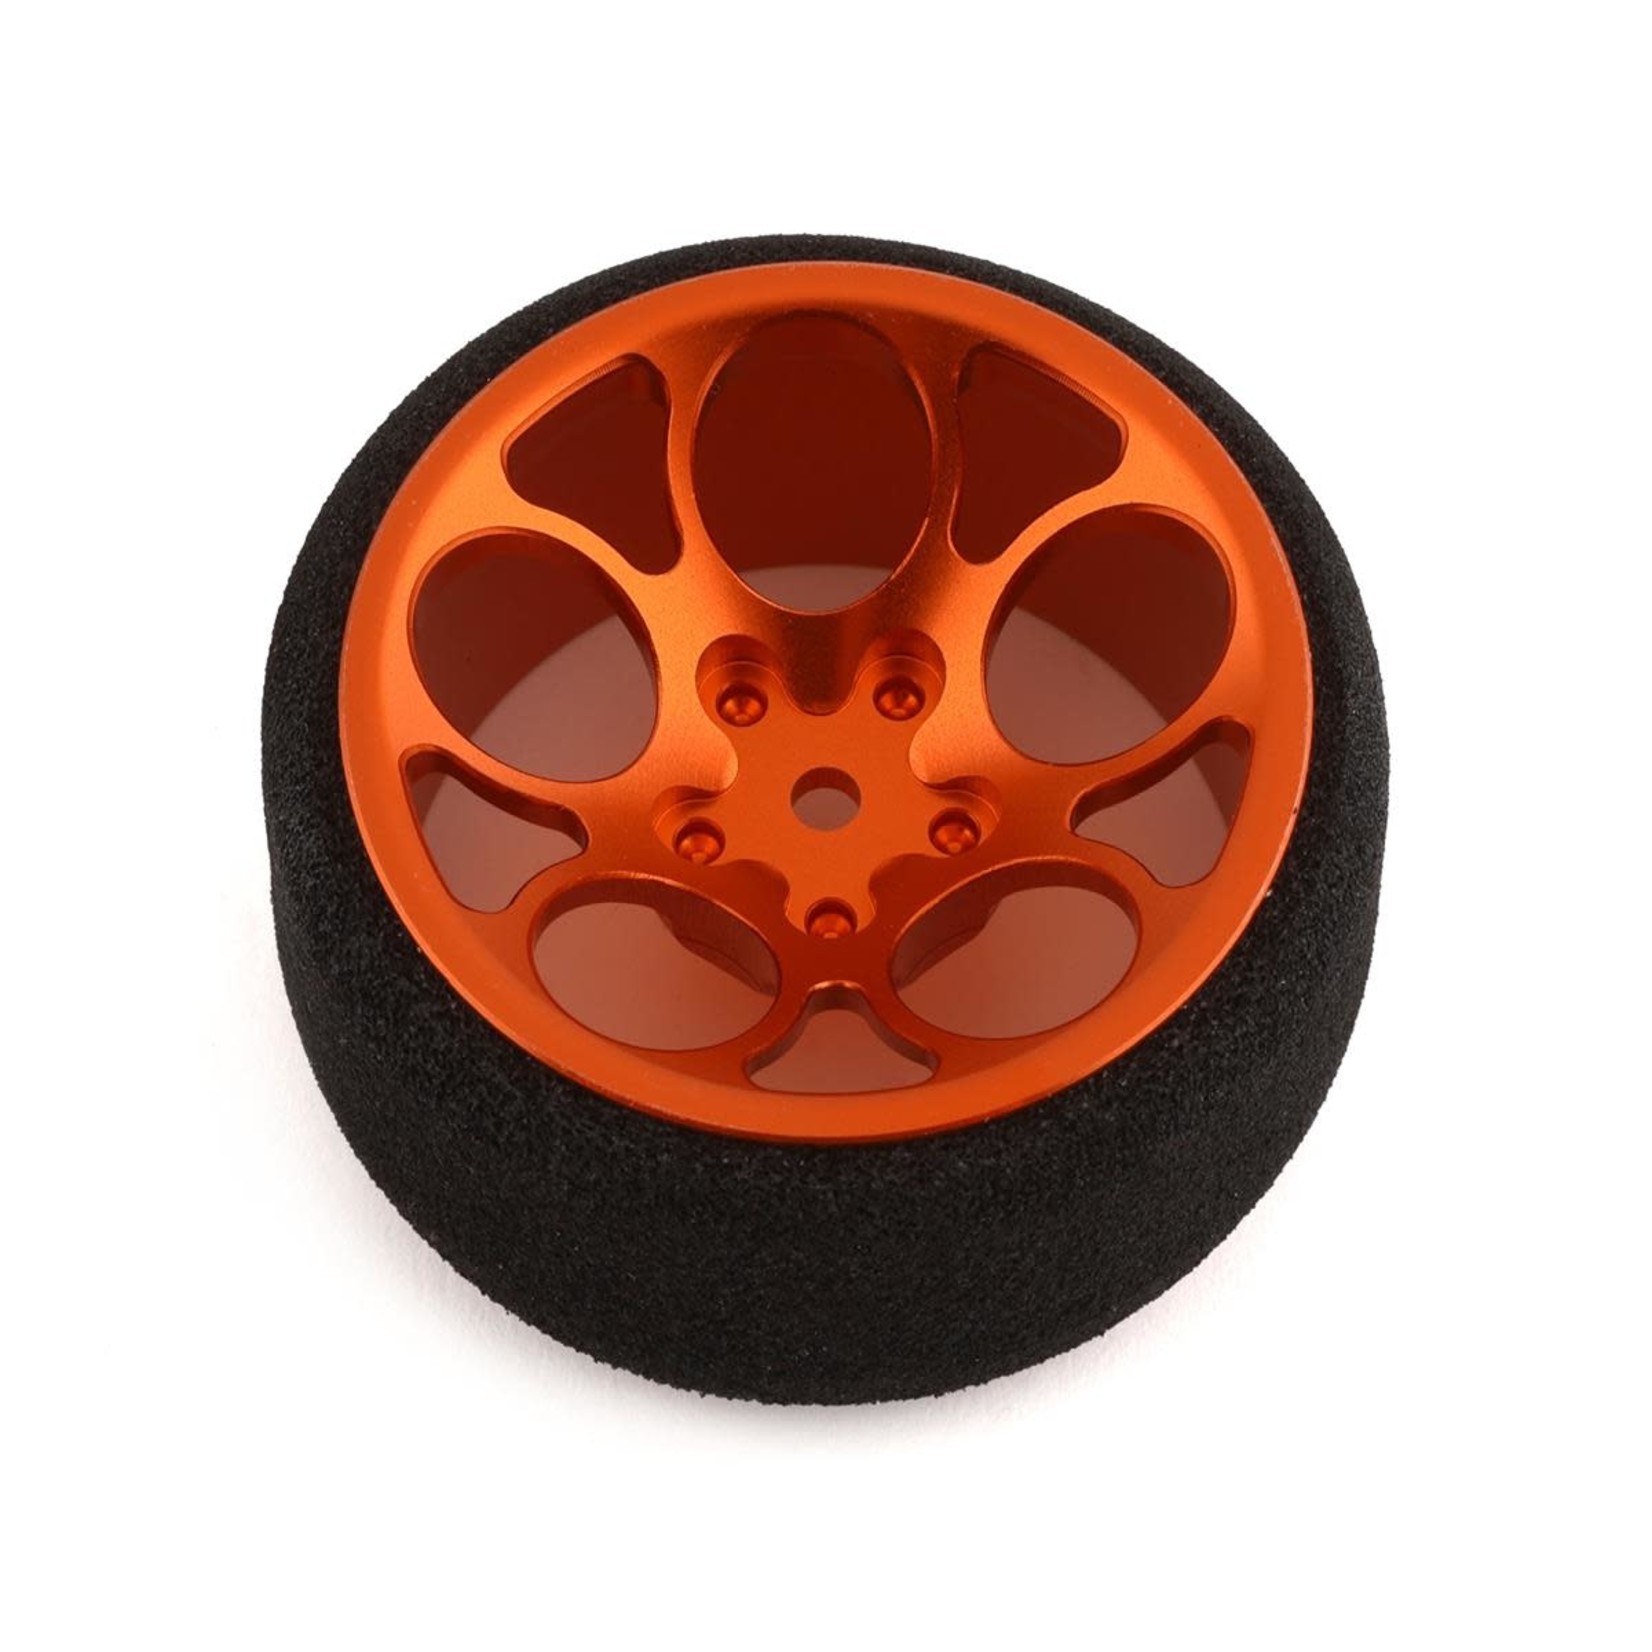 R-Design R-Design Sanwa M17/MT-44 Ultrawide 5-Hole Transmitter Steering Wheel (Orange) #RDD4925